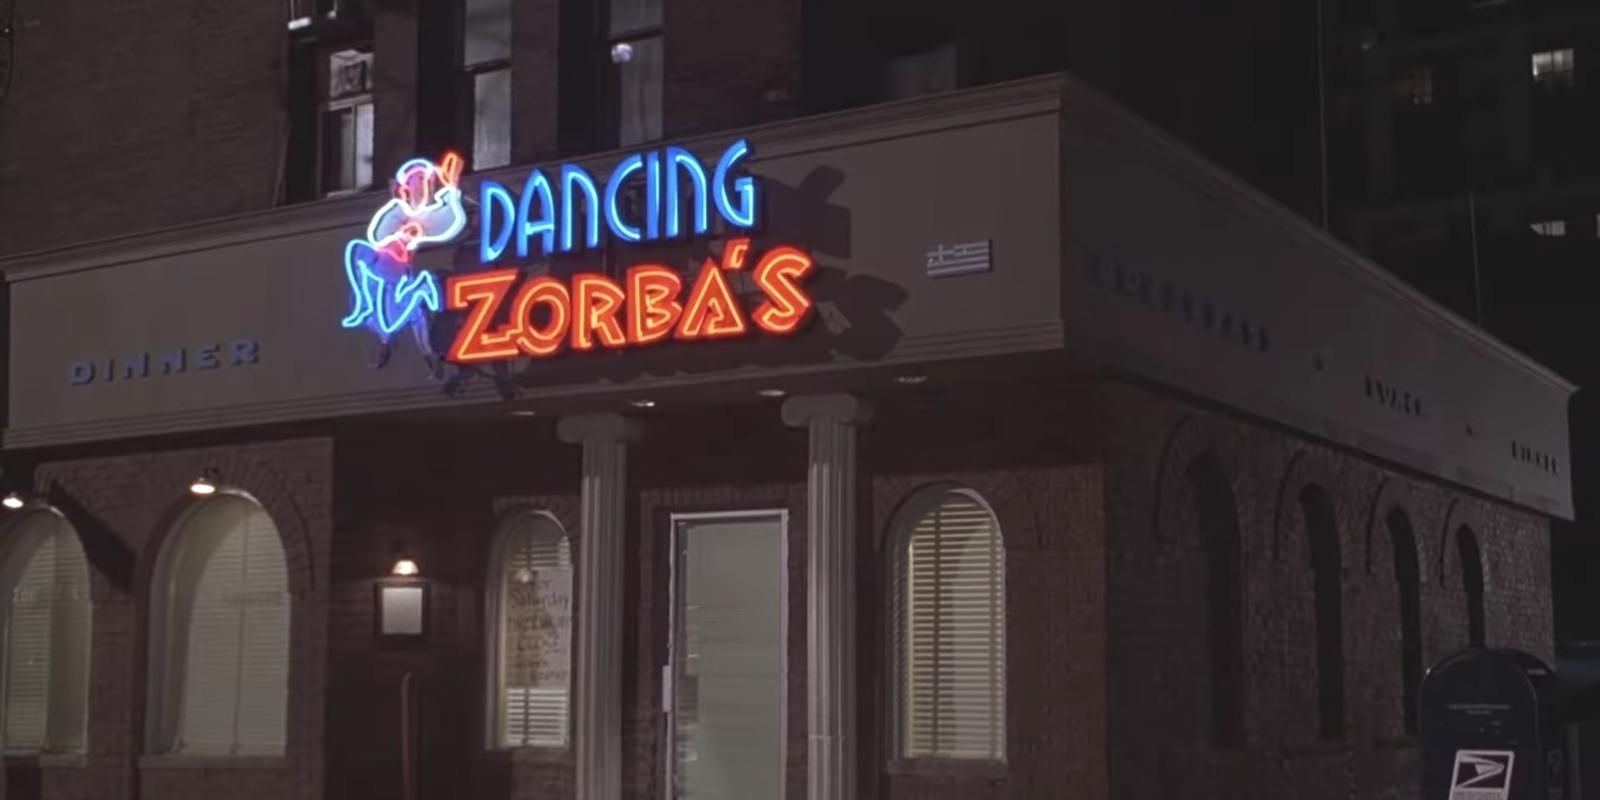 The Dancing Zorbas restaurant at night in My Big Fat Greek Wedding